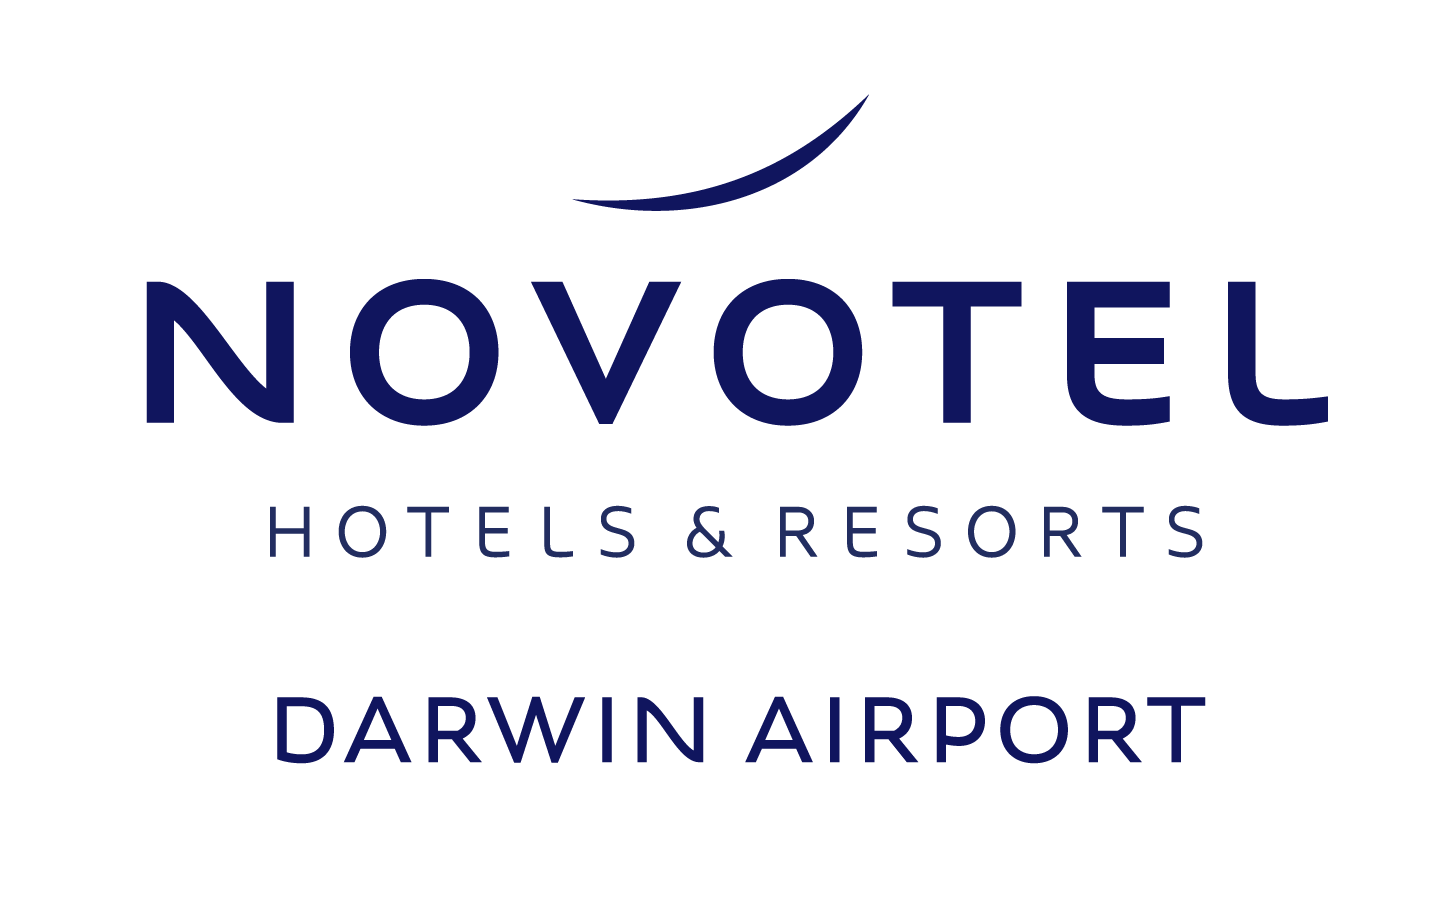 Logo of Novotel Hotels & Resorts Darwin Airport